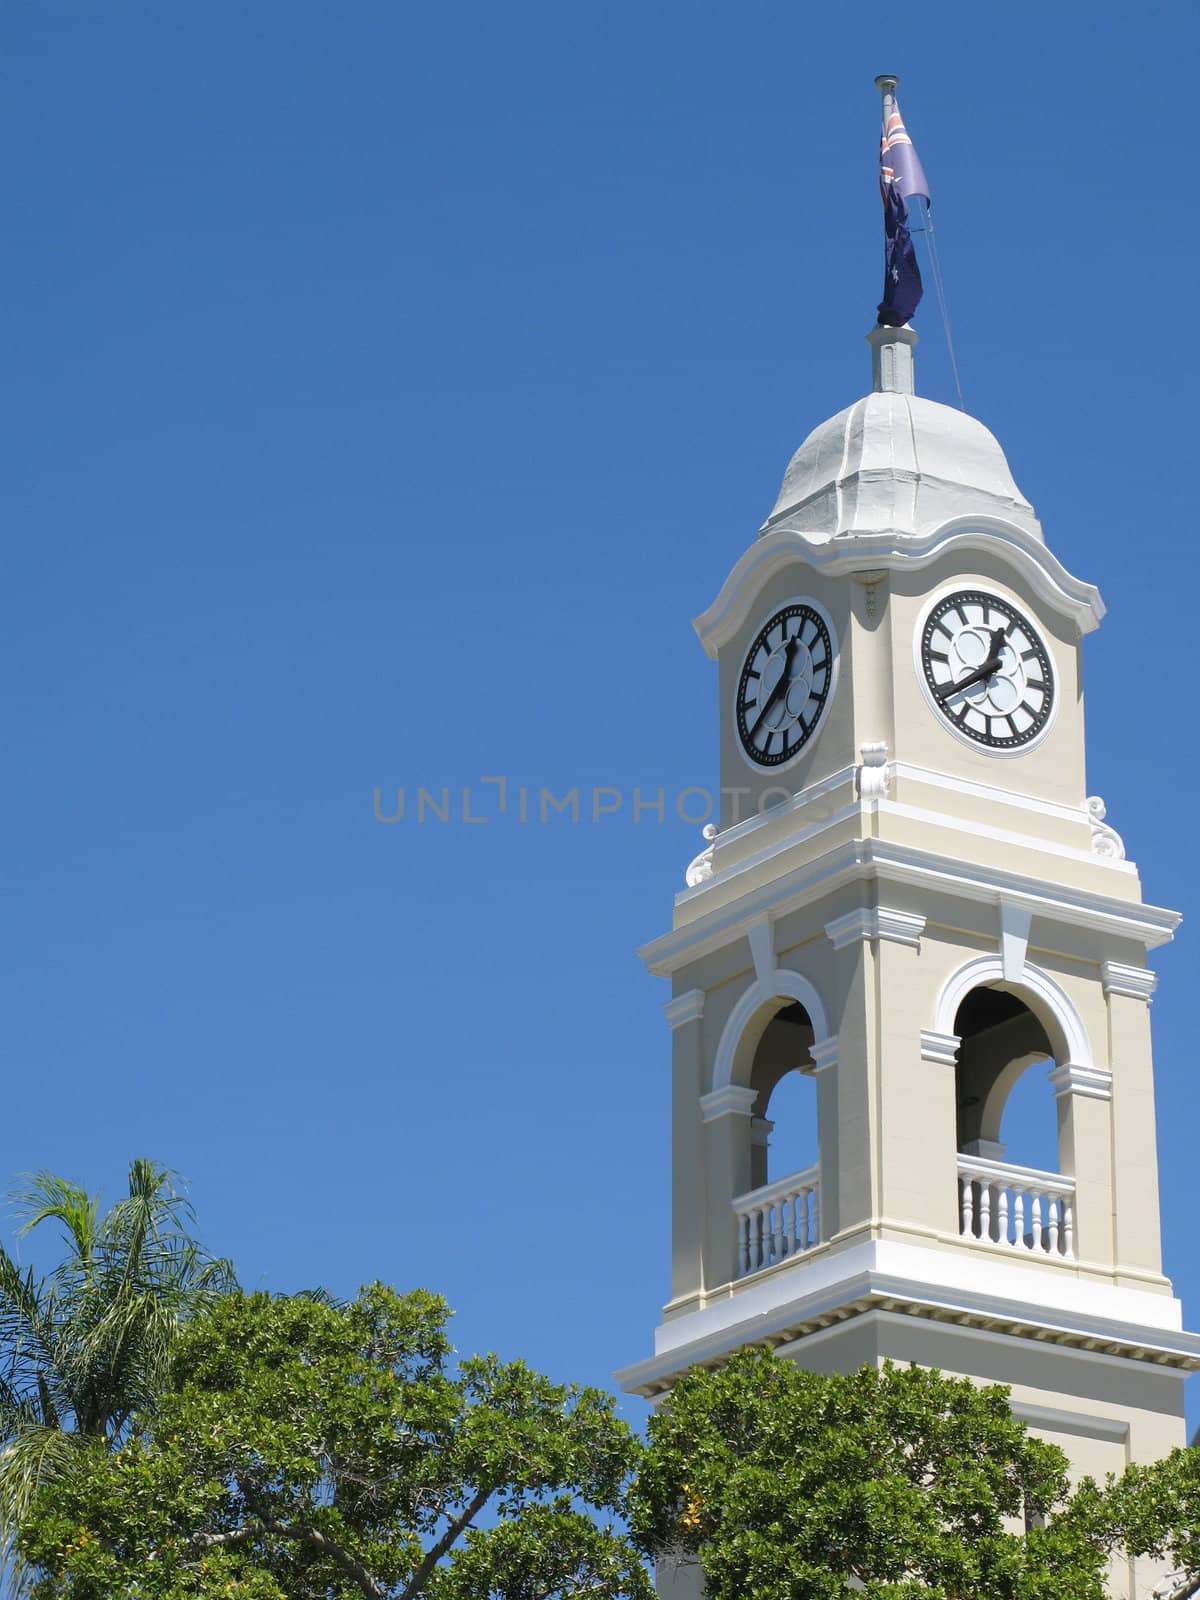 close up on the cityhall clock tower, maryborough, QLD